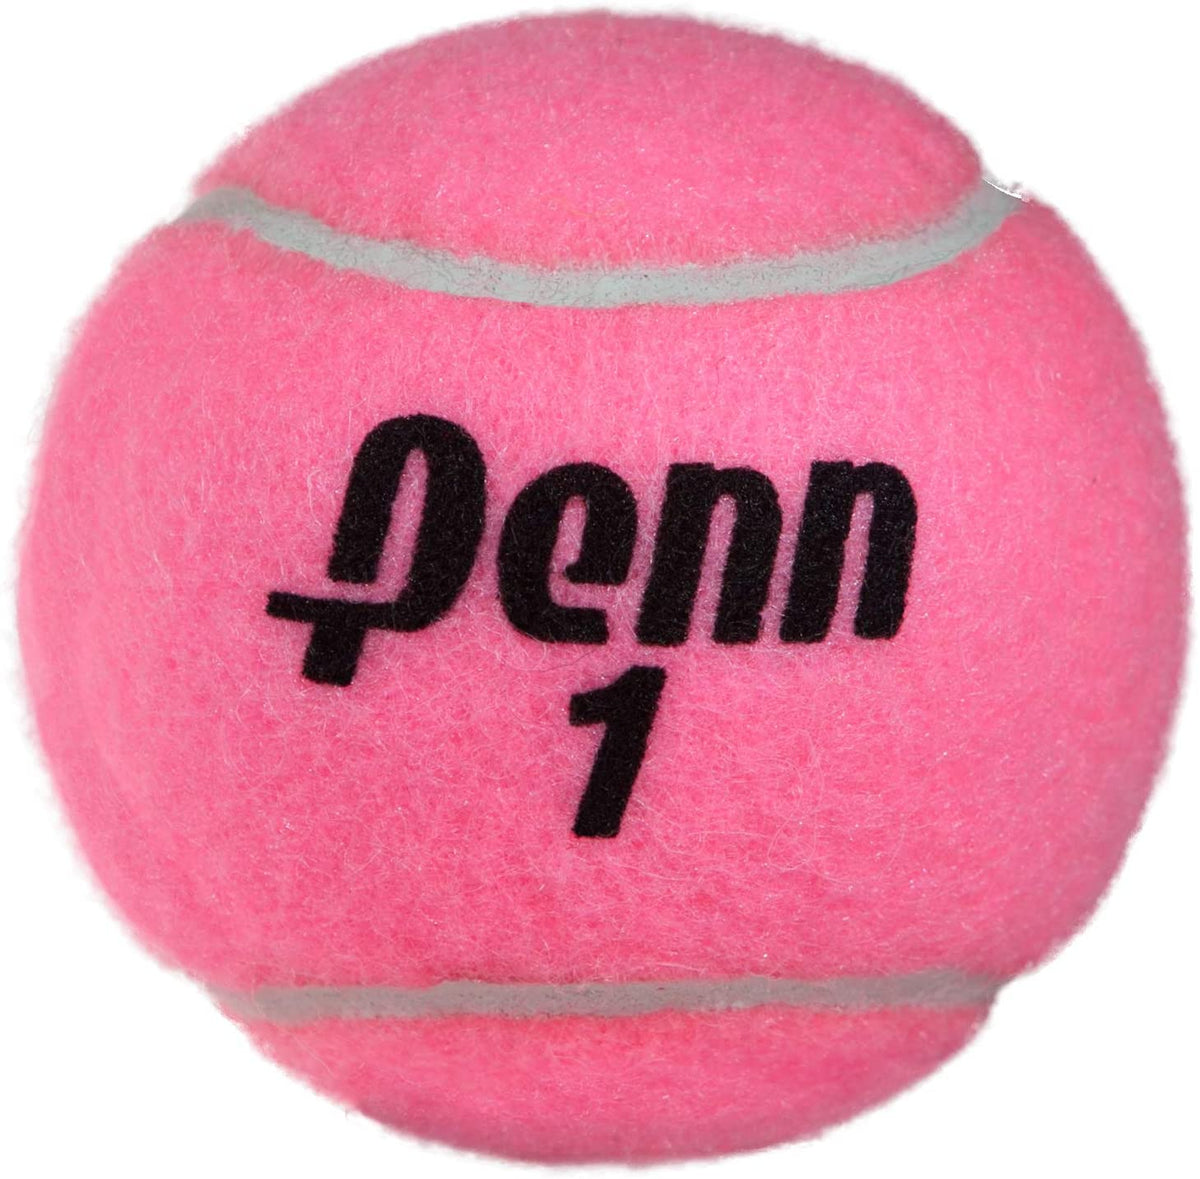 Penn Pink Championship Extra Duty Tennis Ball Can